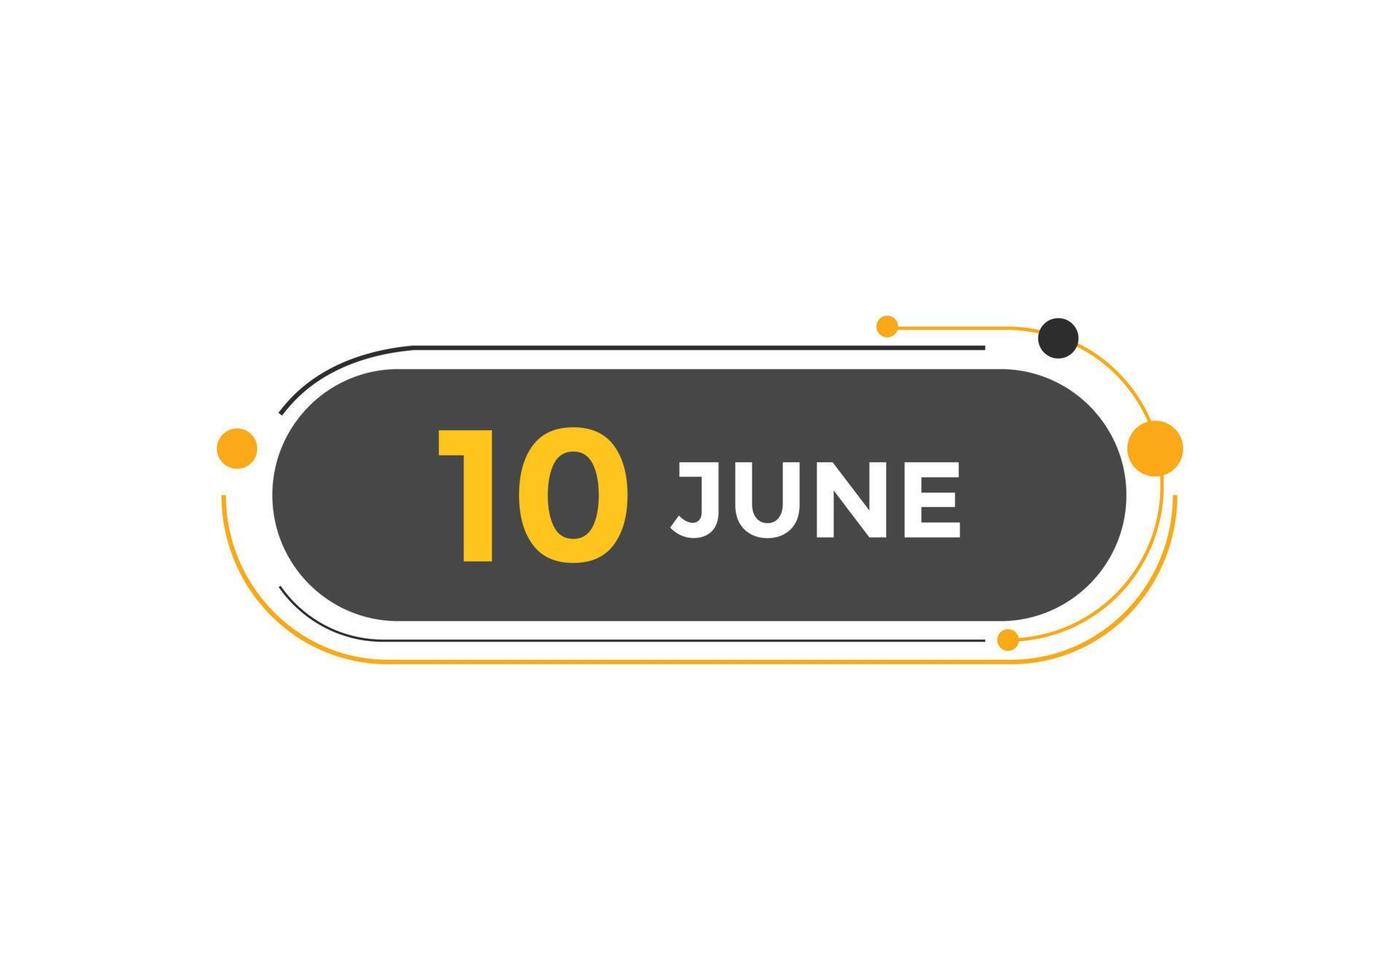 10. juni kalendererinnerung. 10. juni tägliche kalendersymbolvorlage. Kalender 10. Juni Icon-Design-Vorlage. Vektor-Illustration vektor